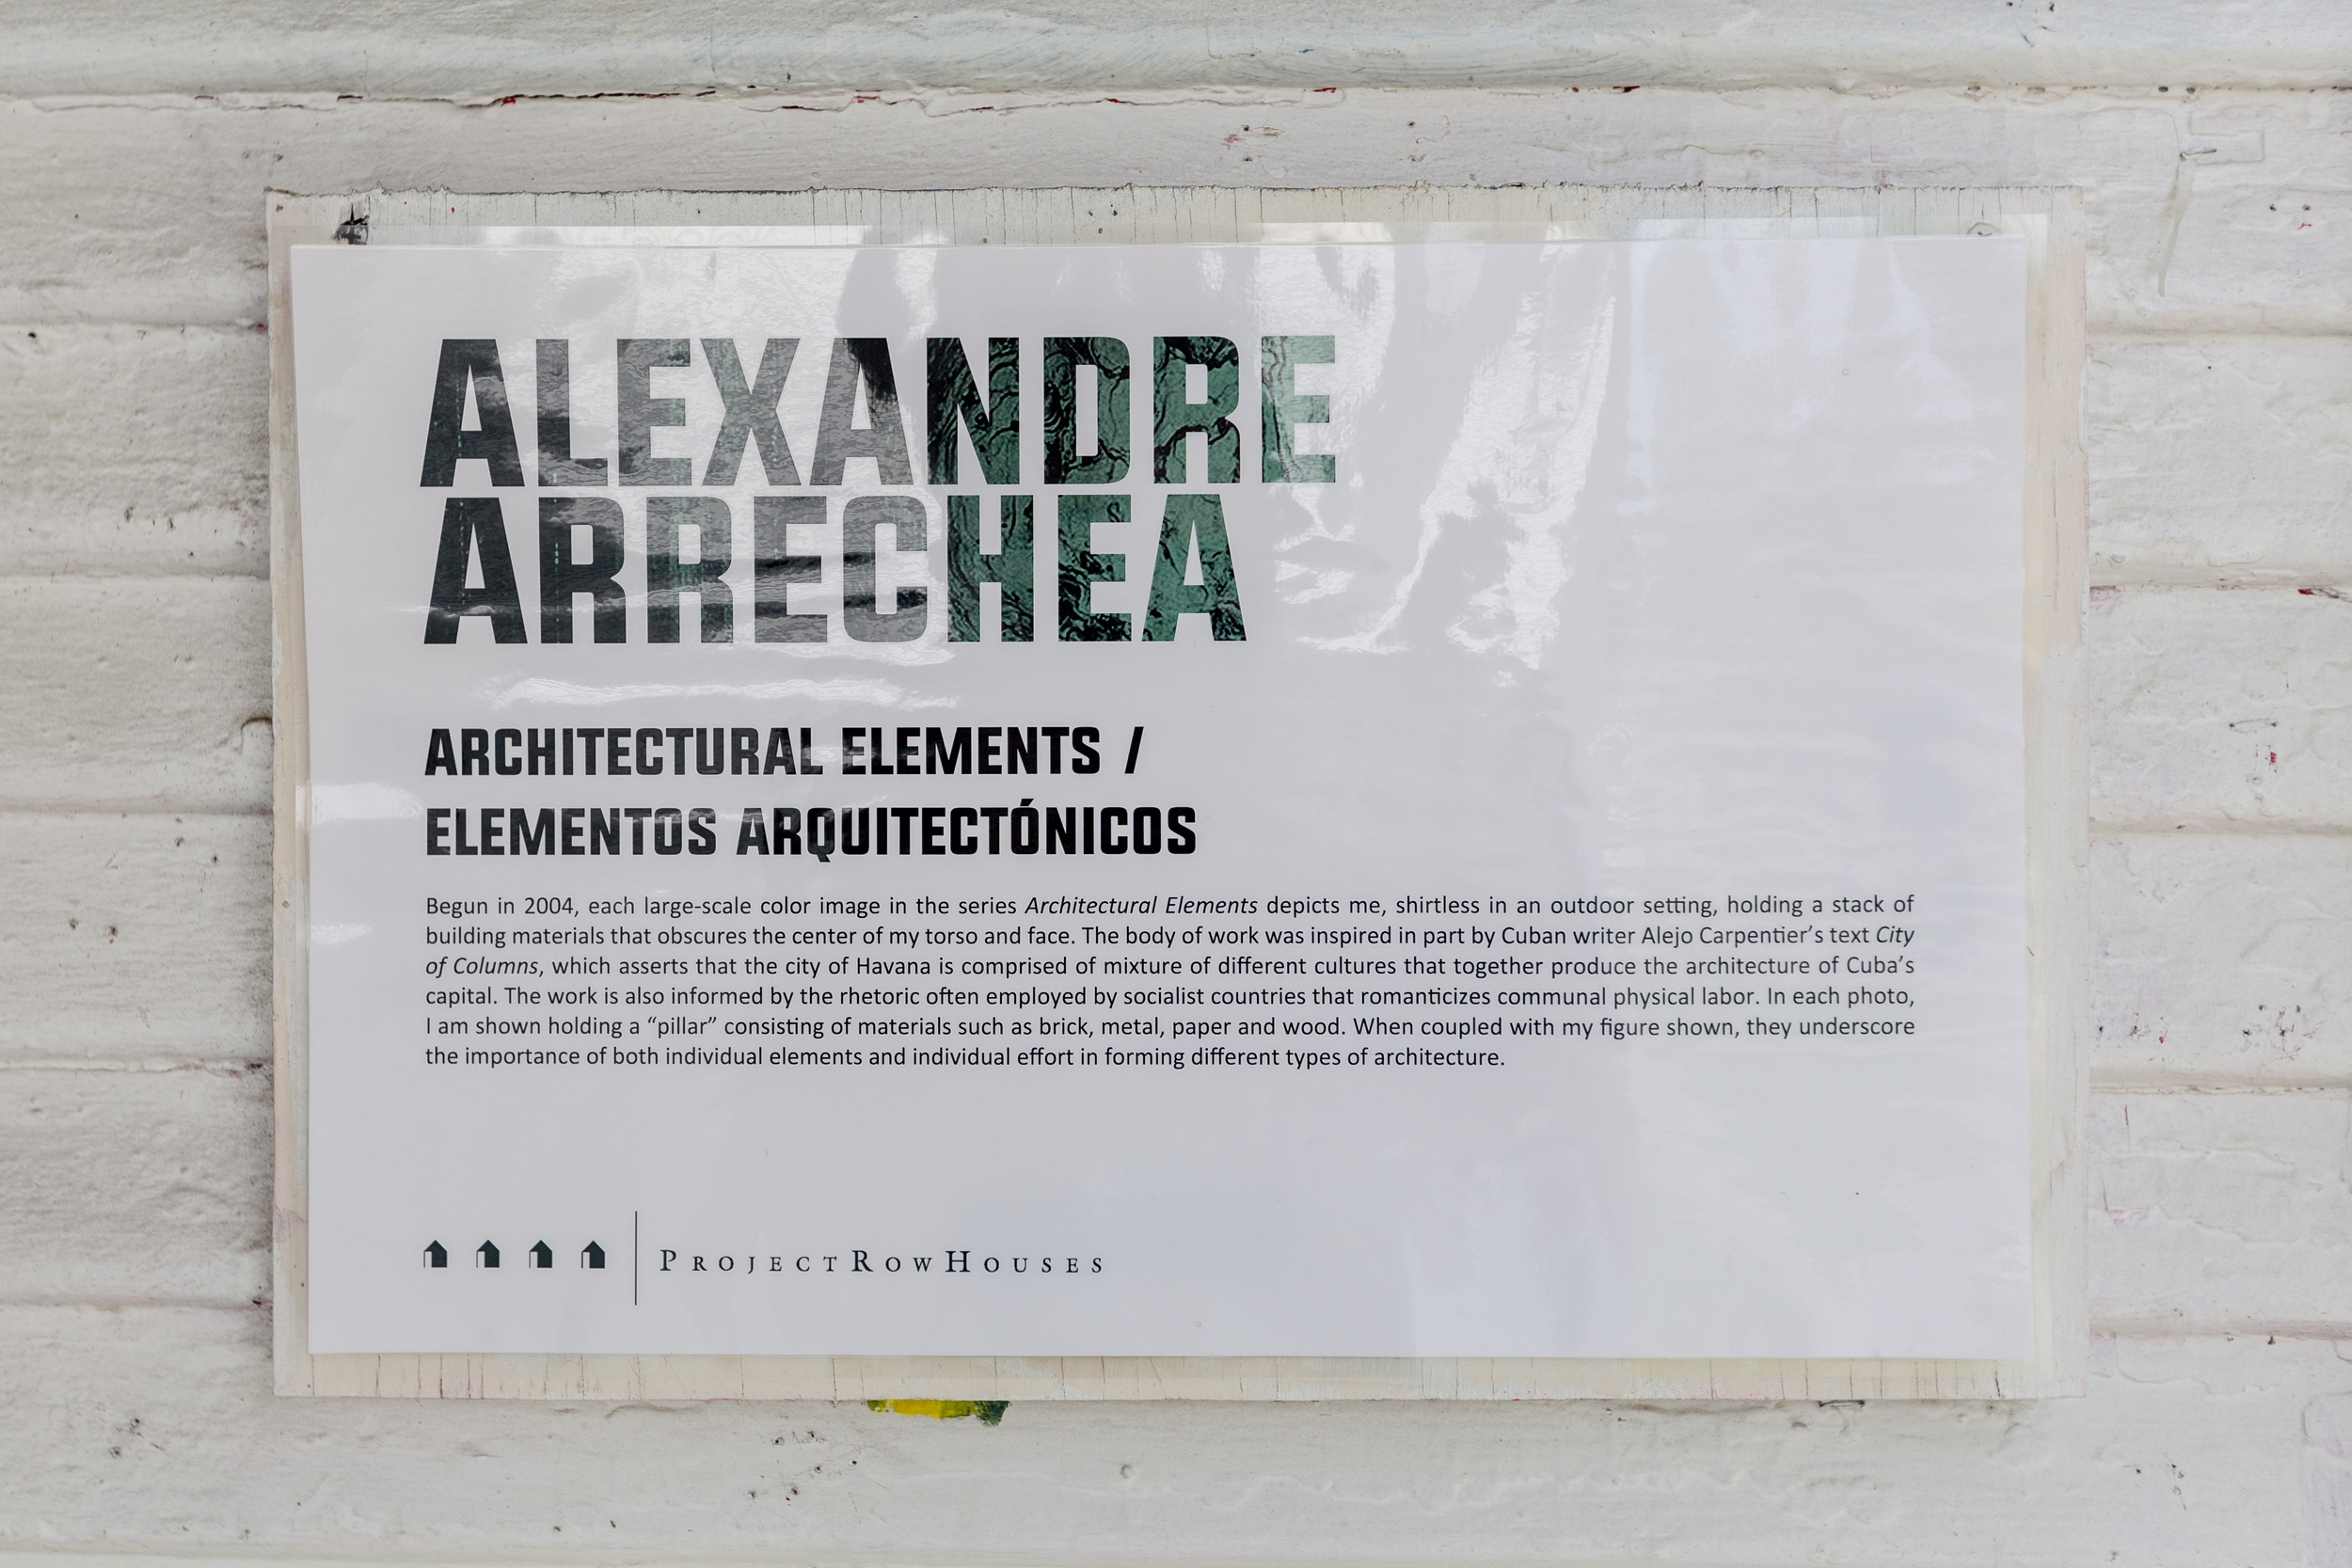  Alexandre Arrechea, Architectural Elements / Elementos Arquitectonicos 